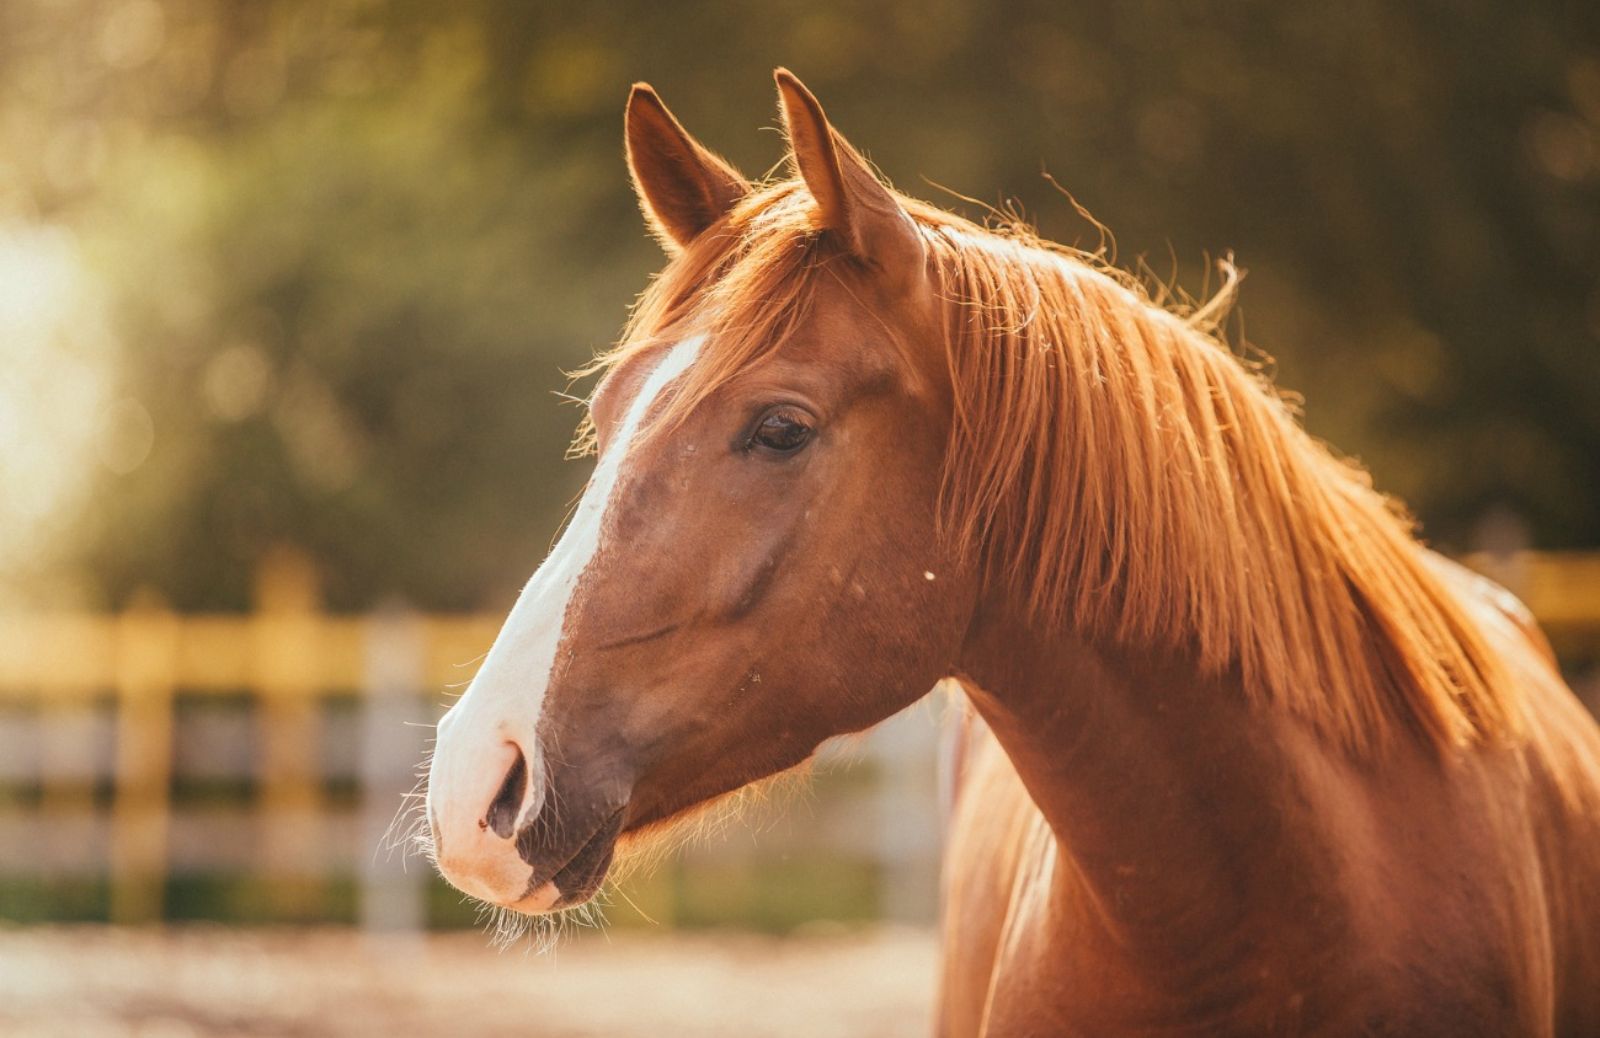 I cavalli riconoscono le emozioni umane